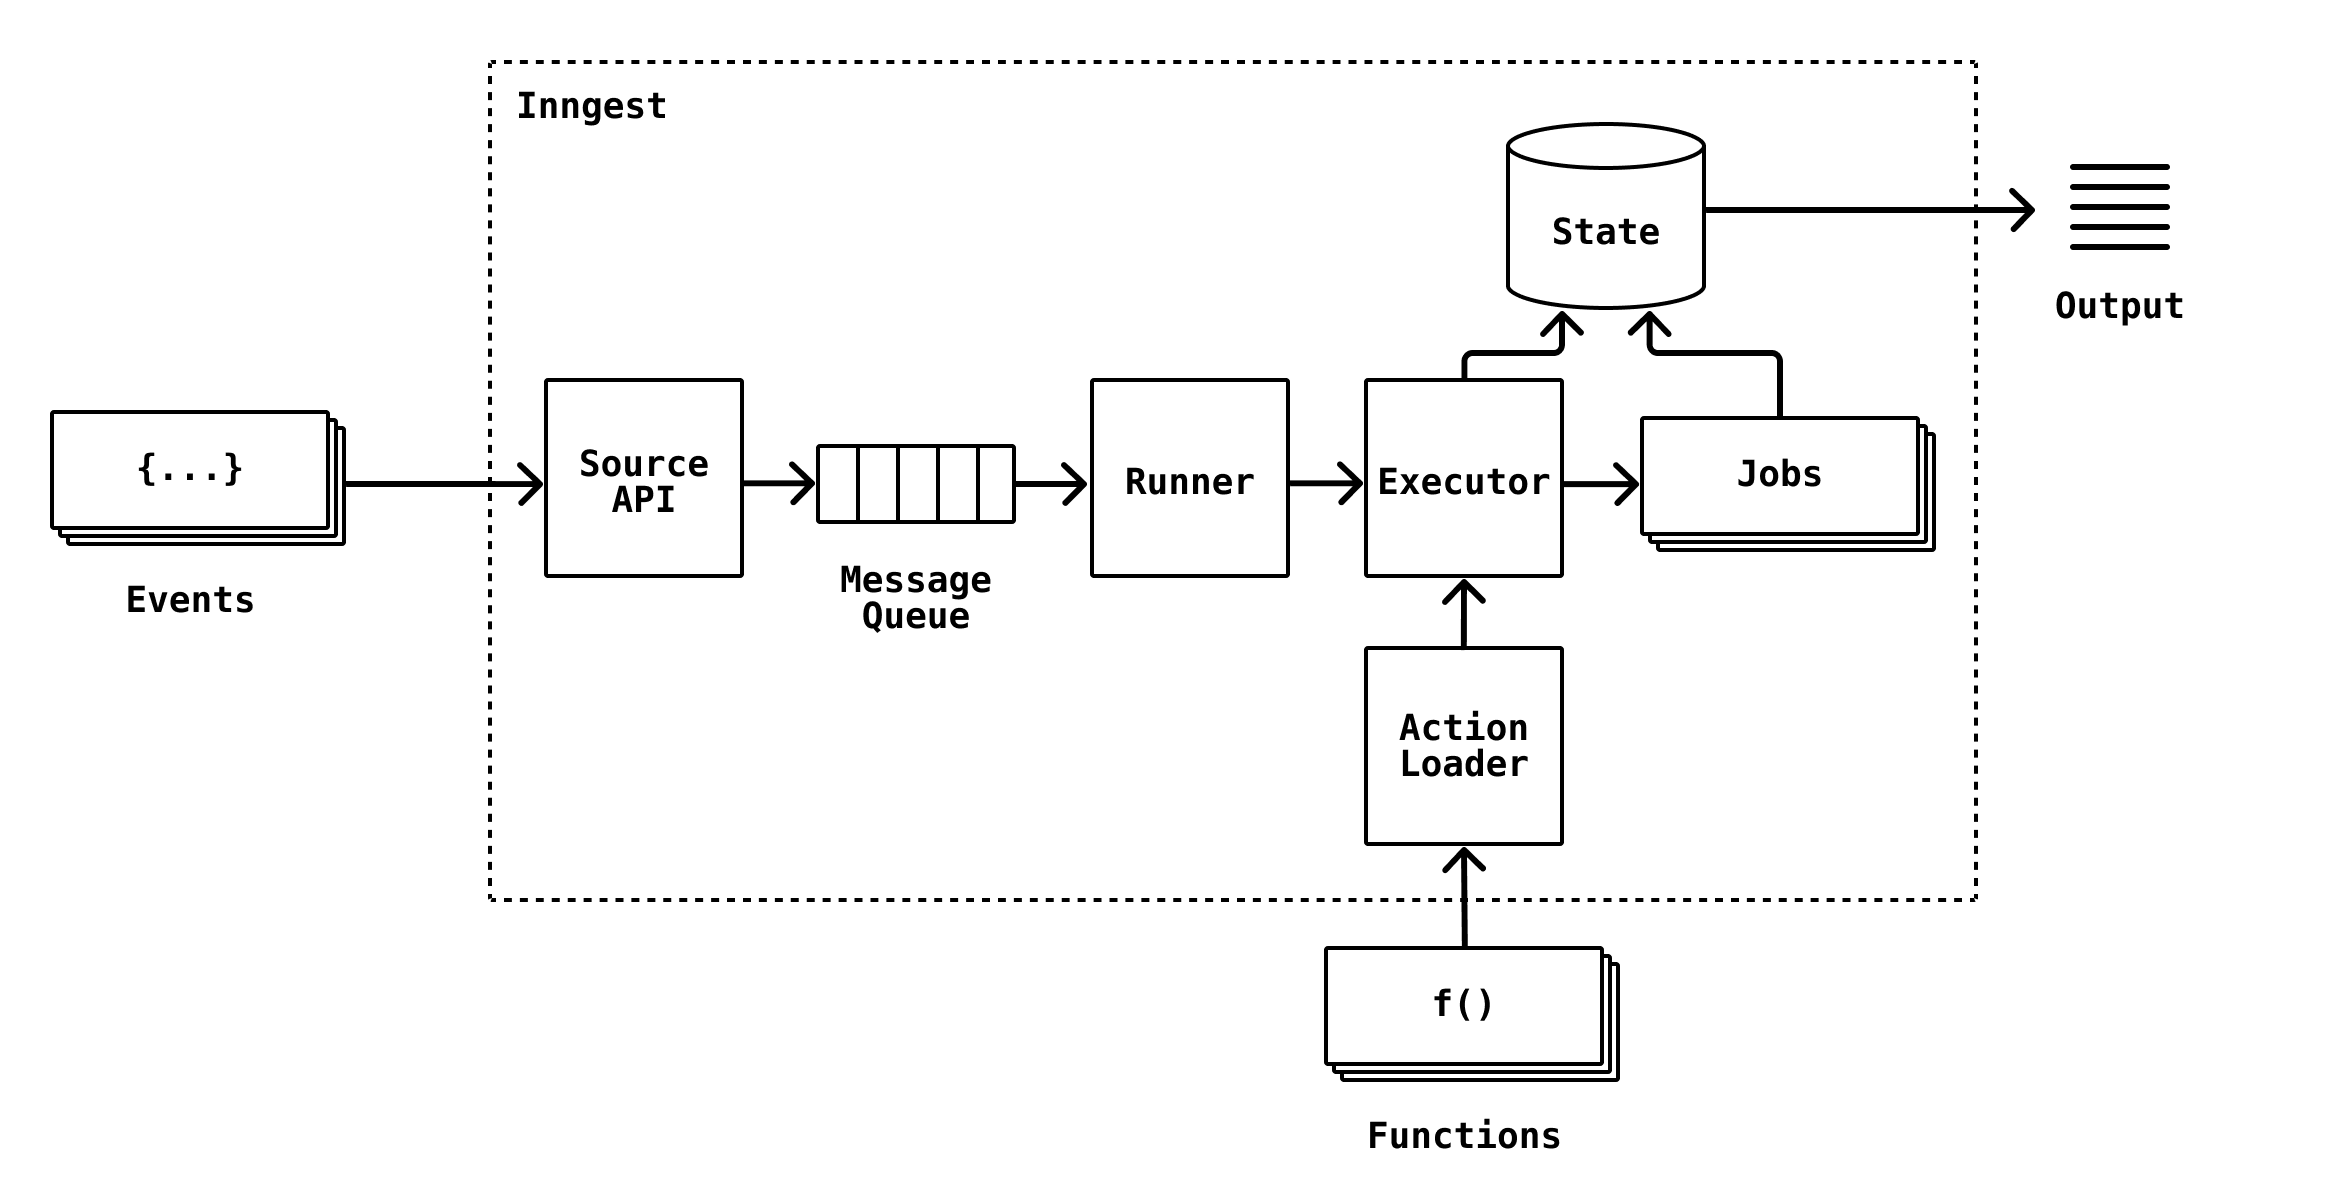 Inngest DevServer architecture diagram